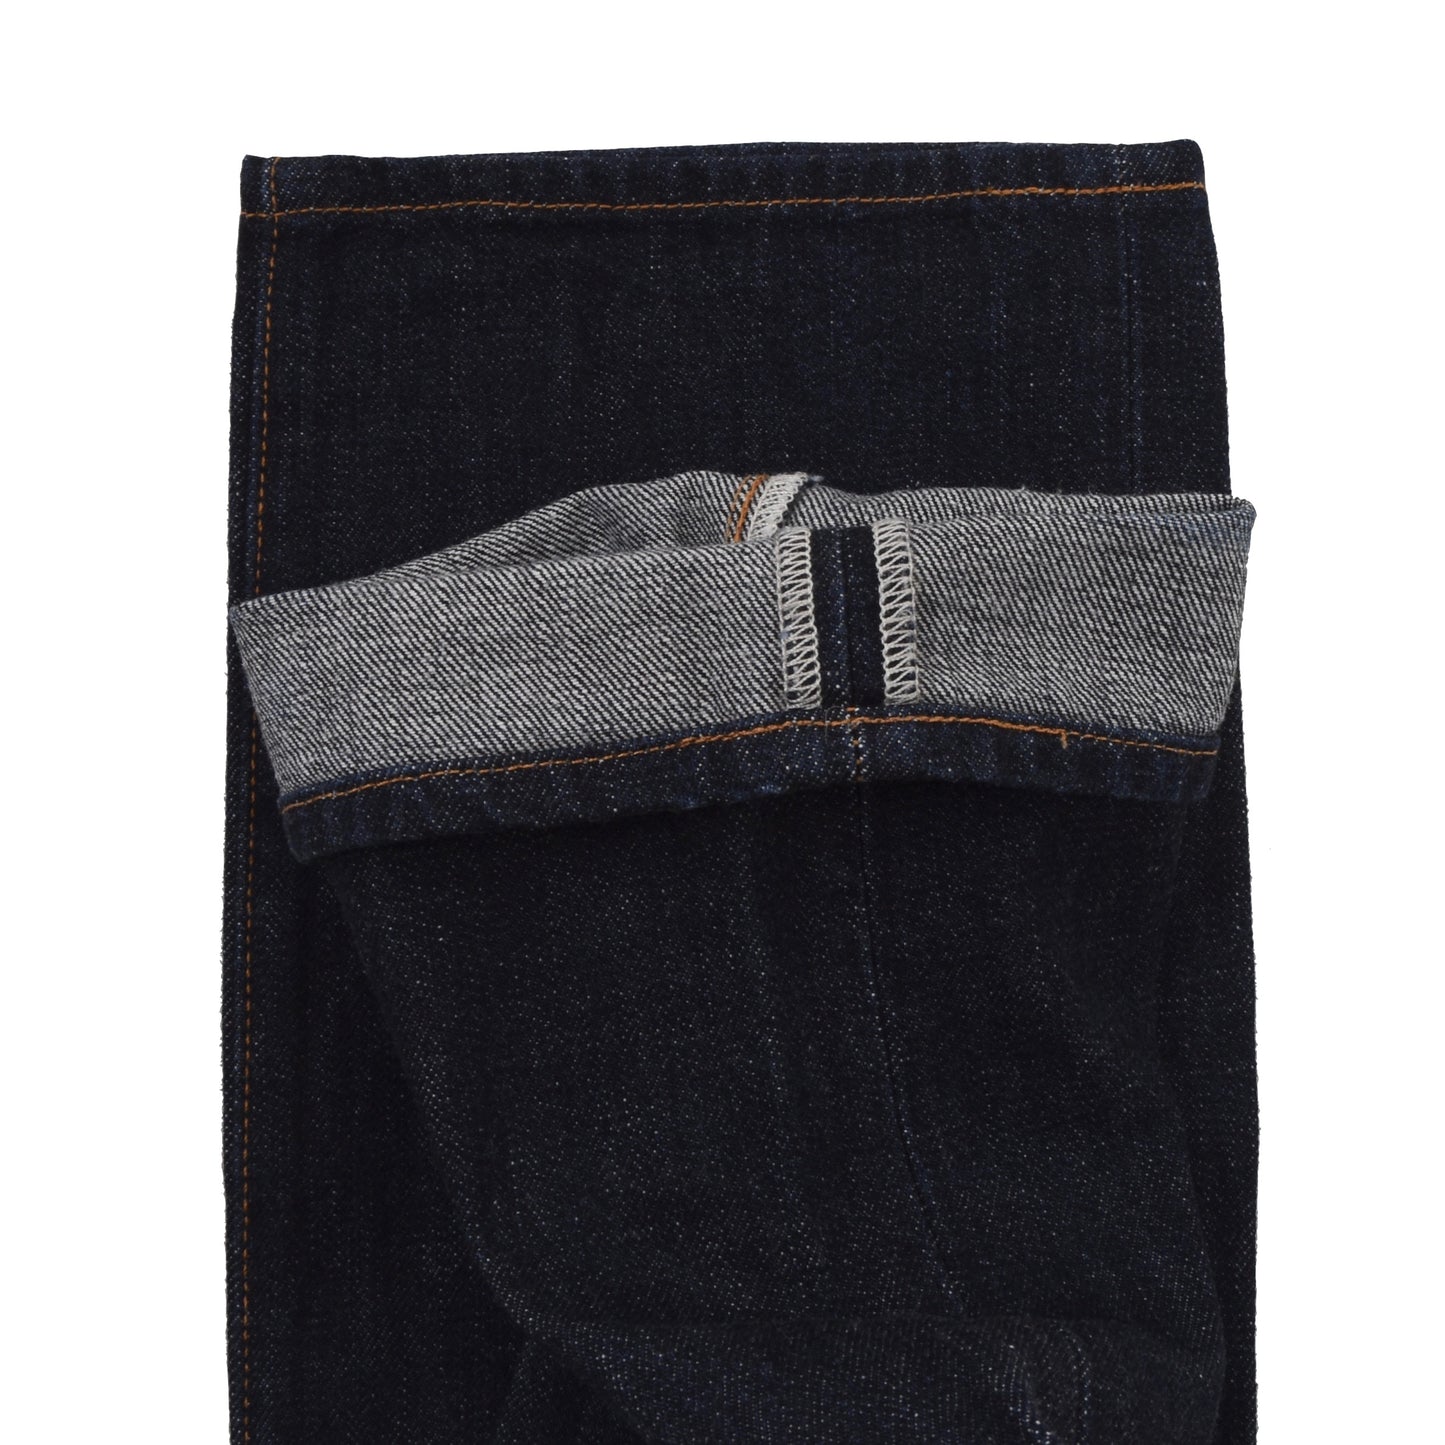 Indigofera Jeans Modell Ray Größe 33 34 - Blau